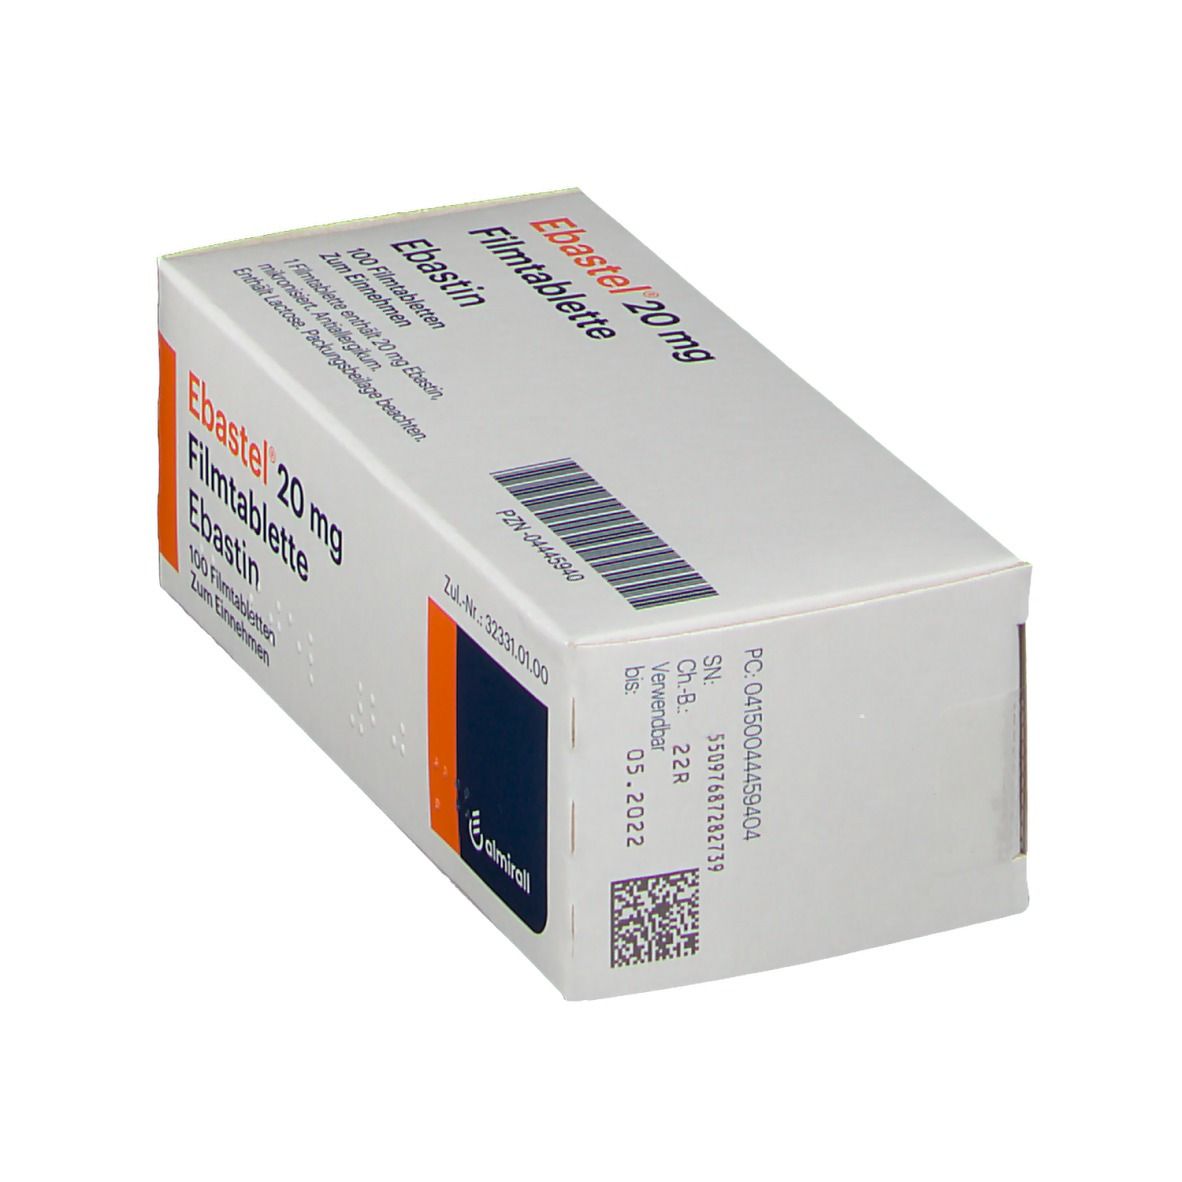 Ebastel® 20 mg